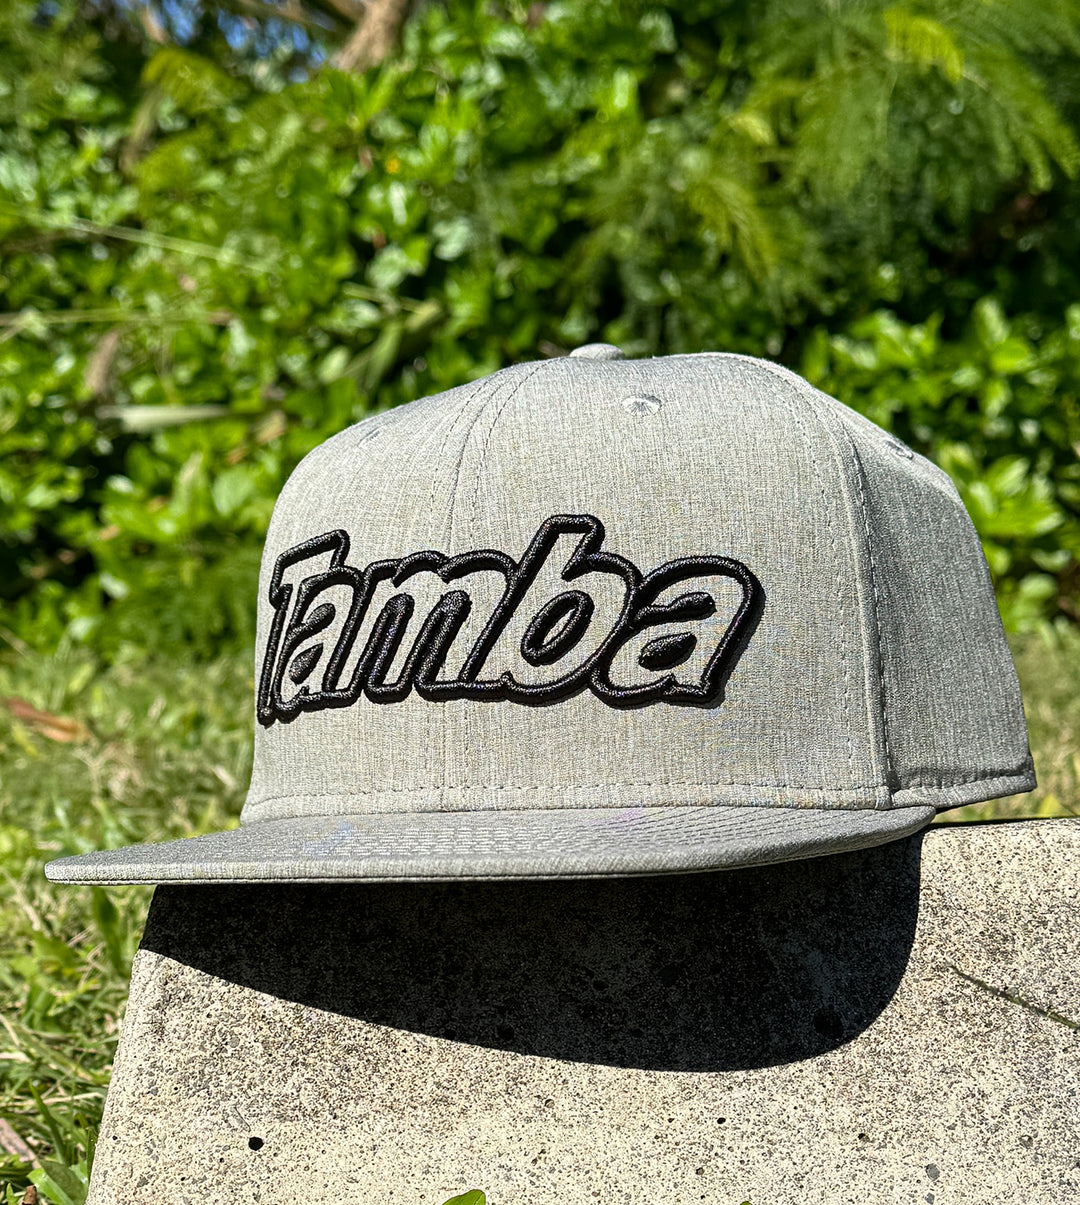 Classic Tamba 3D Snapback Hat - Surplus Heather